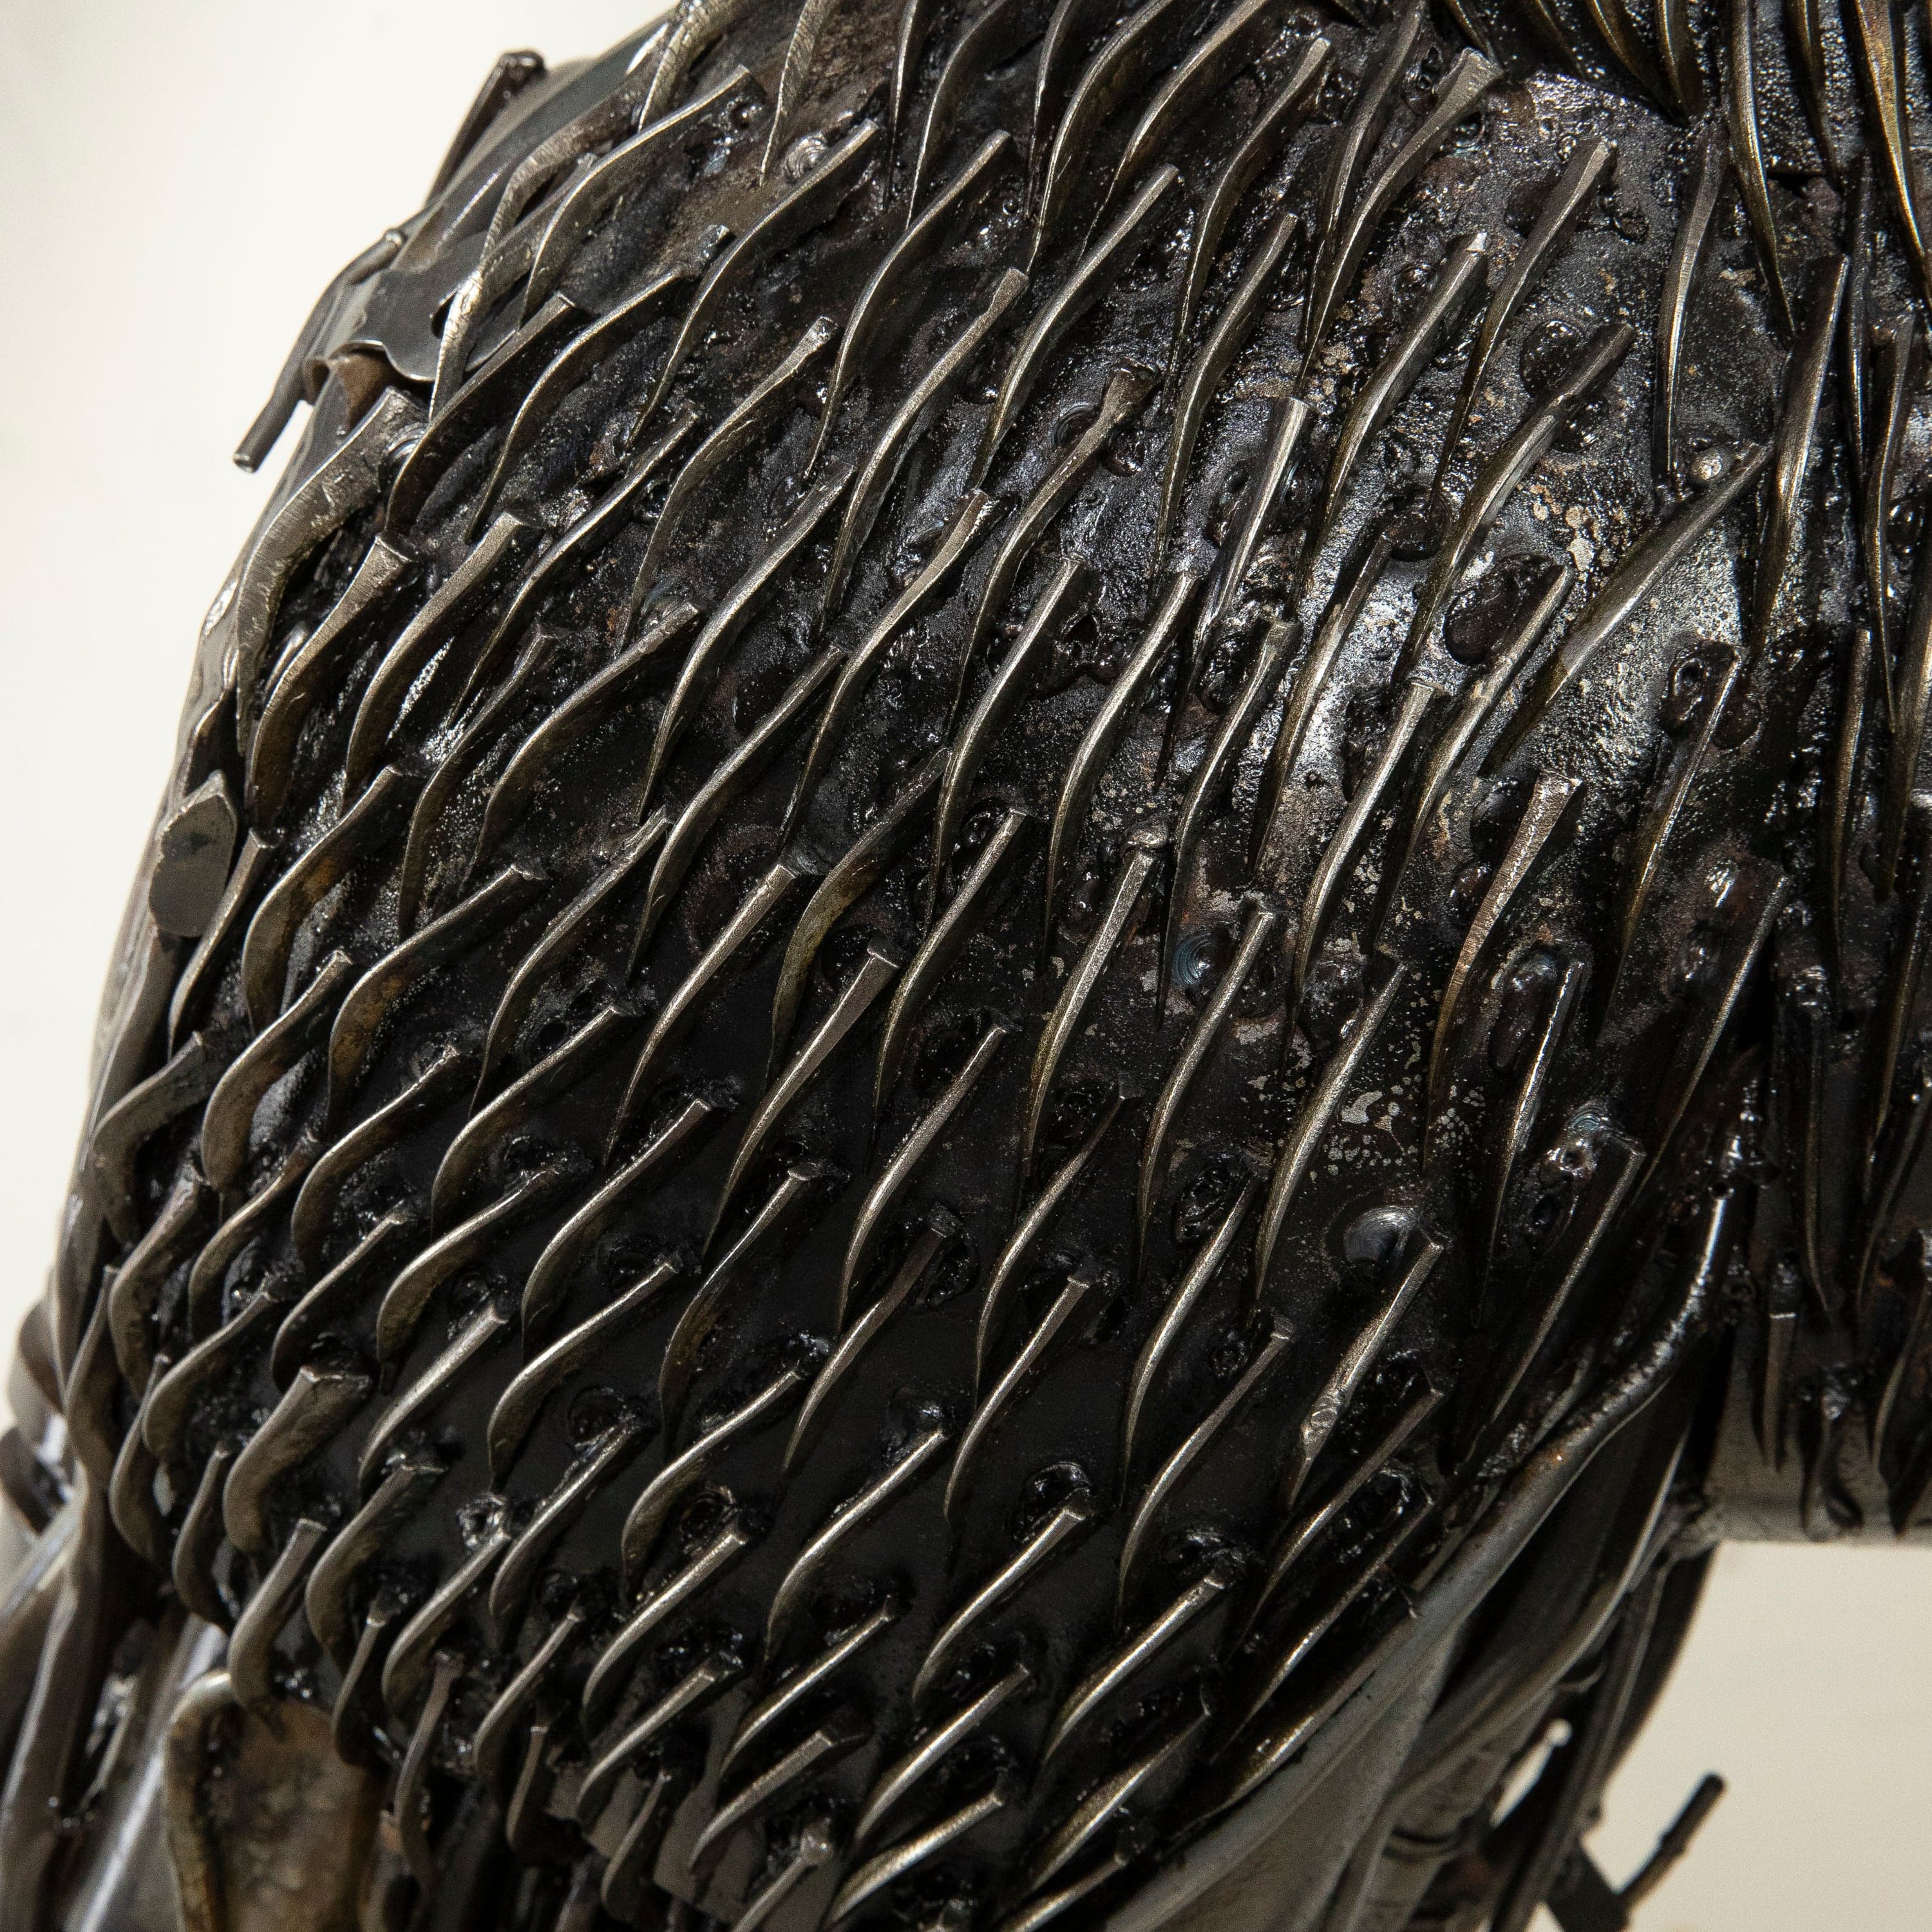 Kalifano Recycled Metal Art 79" King Kong Inspired Recycled Metal Art Sculpture RMS-KKONG200-S01